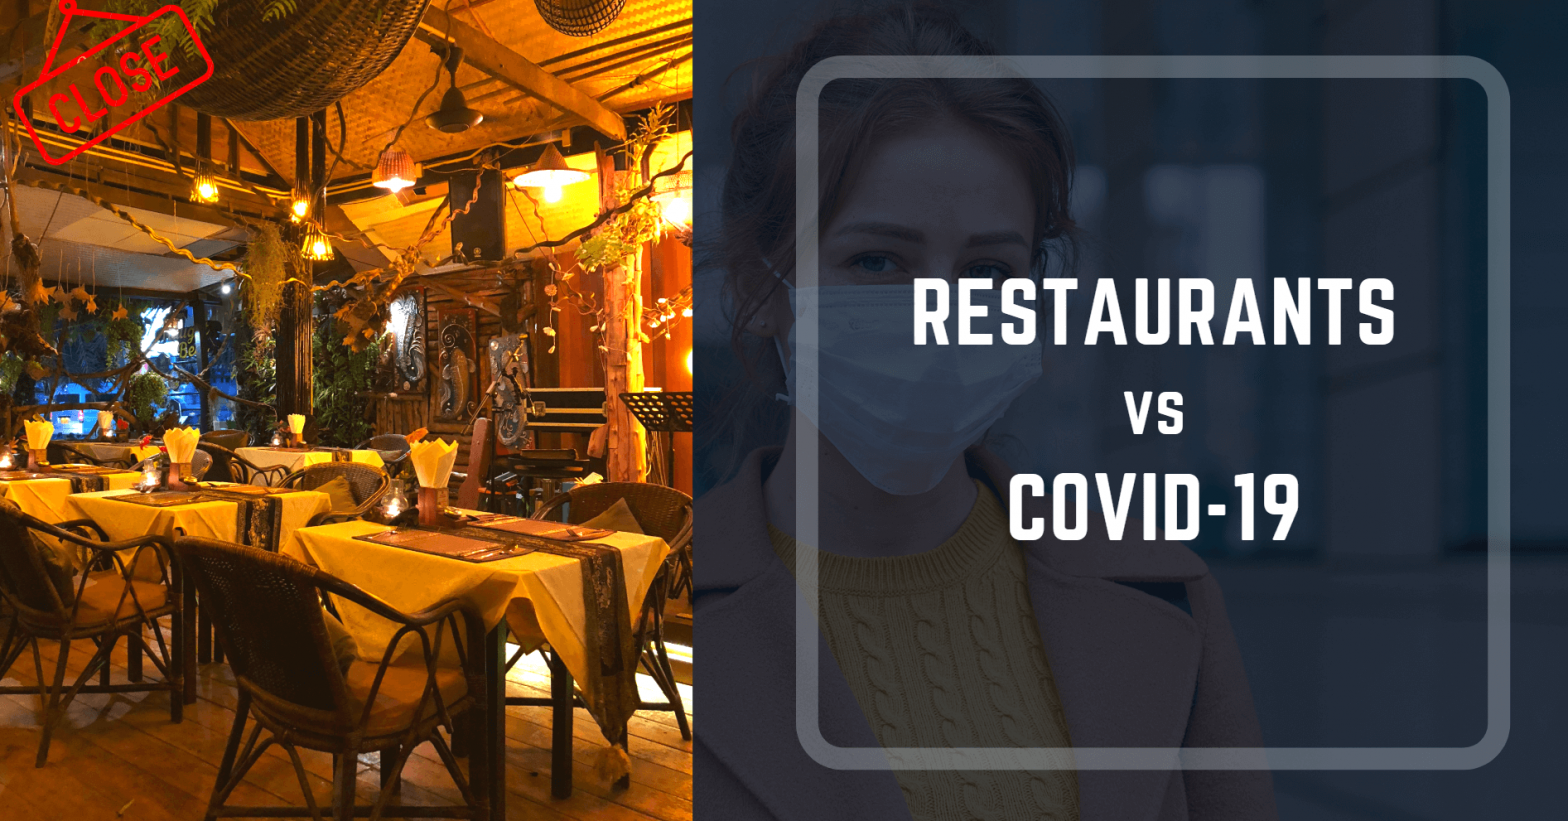 Restaurant business vs Corona